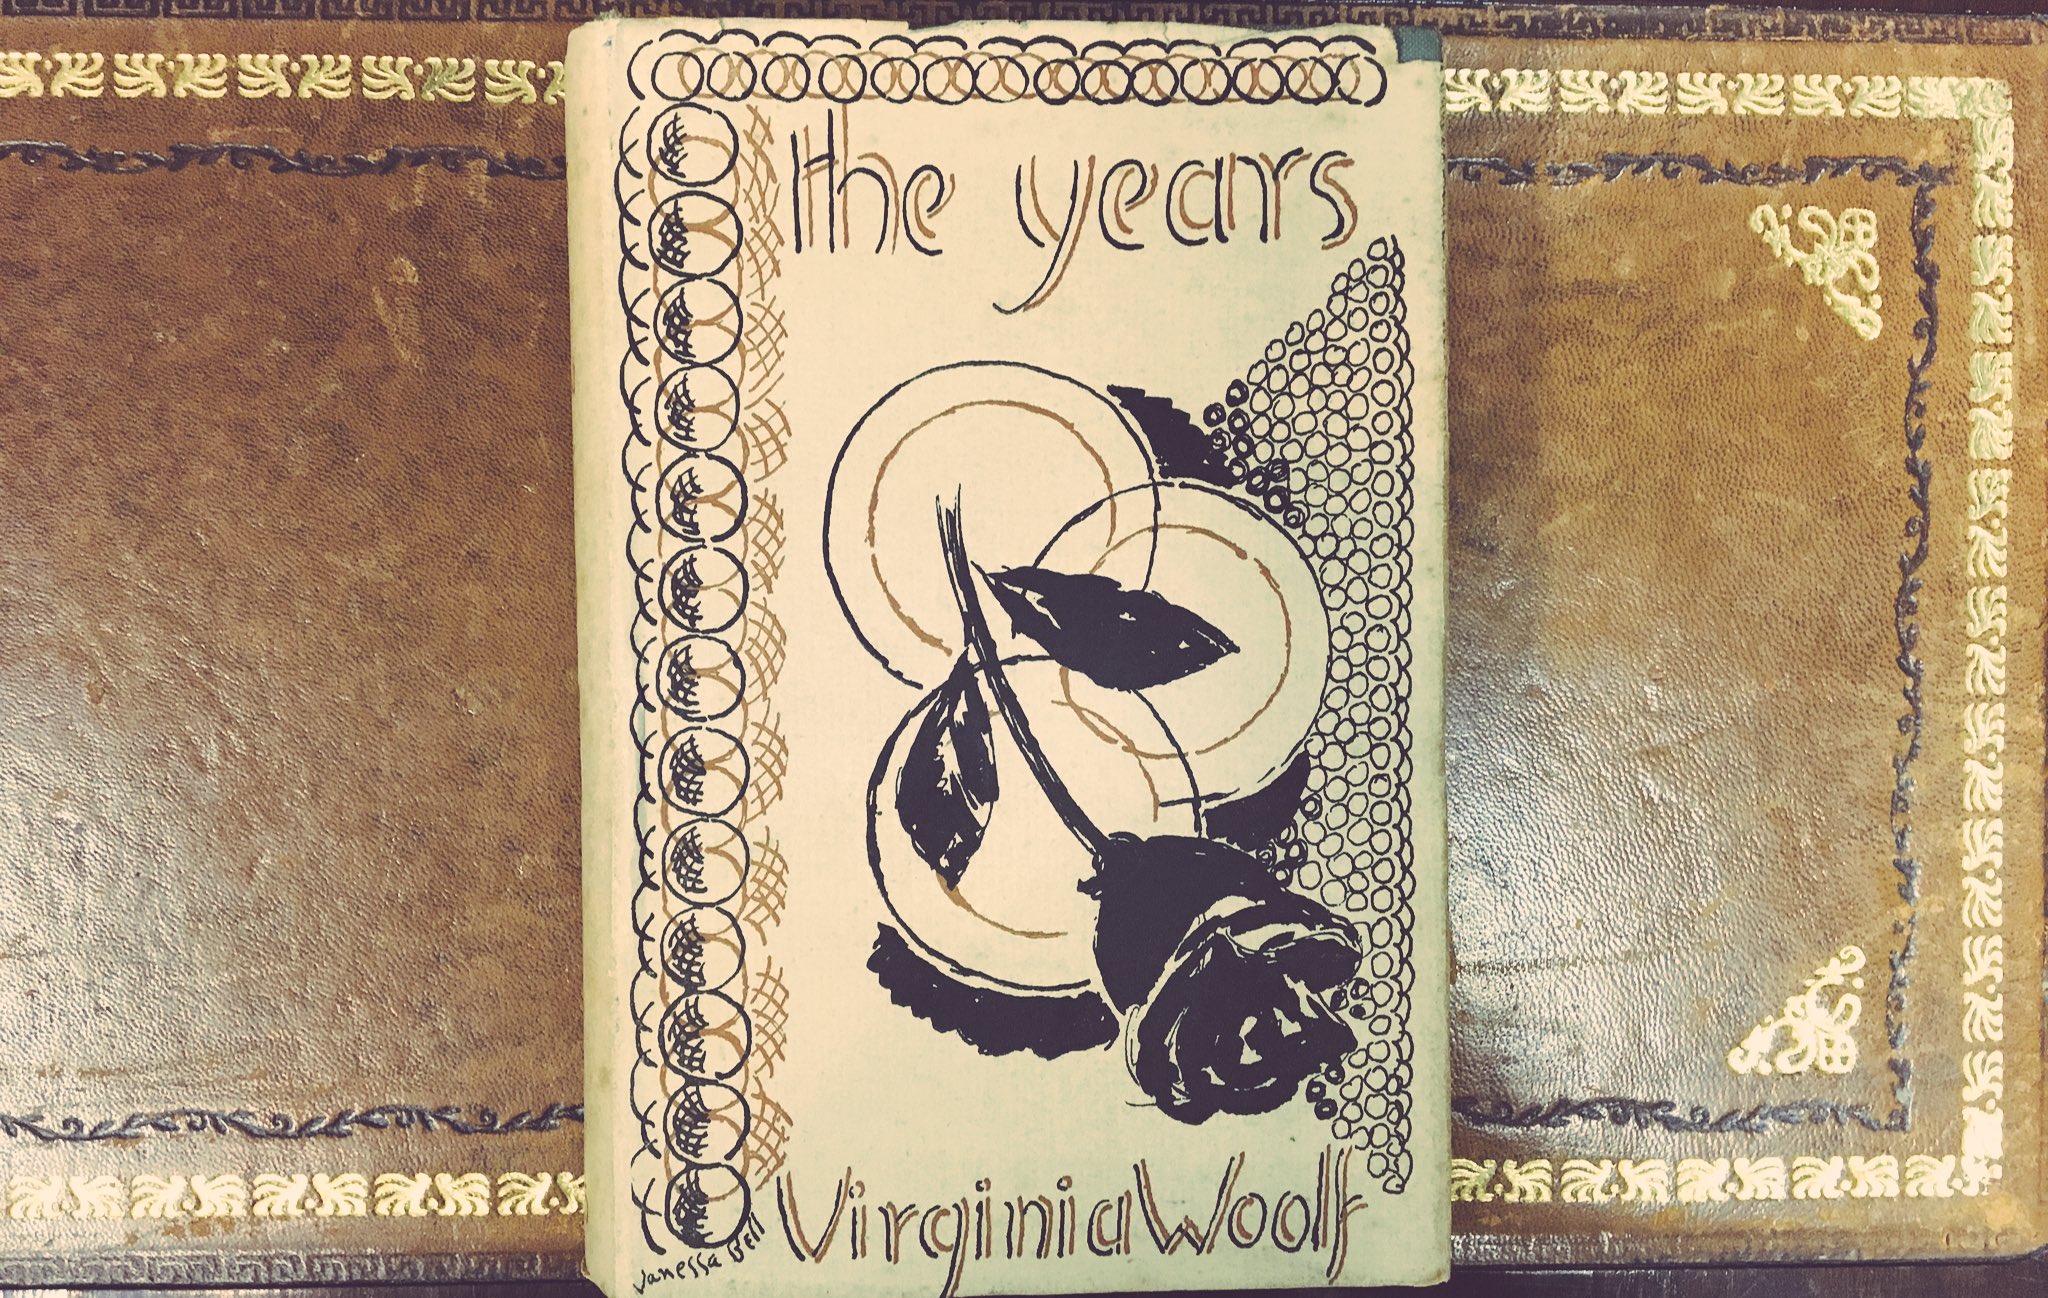 Kitazawa Bookstore 北澤書店 The Years Virginia Woolf Firstedition イギリスの女性小説家ヴァージニアウルフの作品 歳月 の初版 彼女もまた ブルームズベリー グループの一員であり 世紀モダニズム文学 の主要な作家の一人 Kitazawabooks